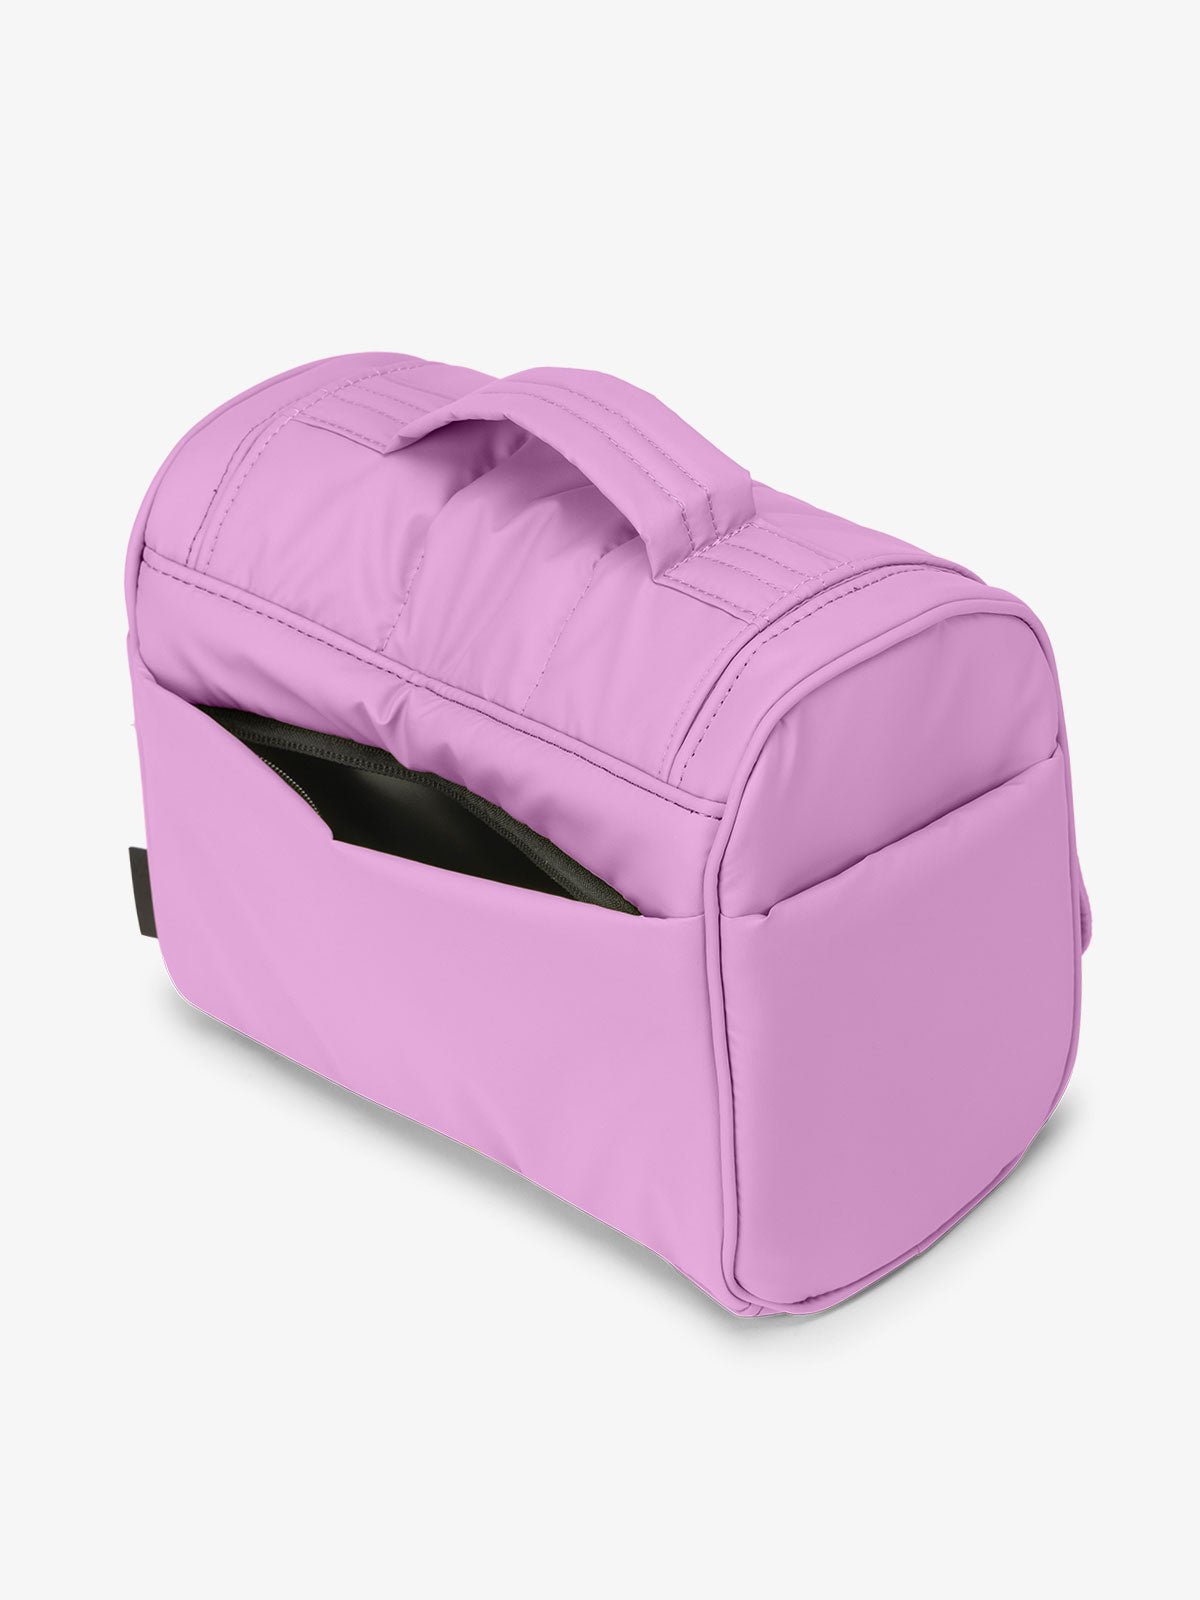 Lavender CALPAK Luka Hanging Toiletry Bag featuring additional secure zippered back pocket